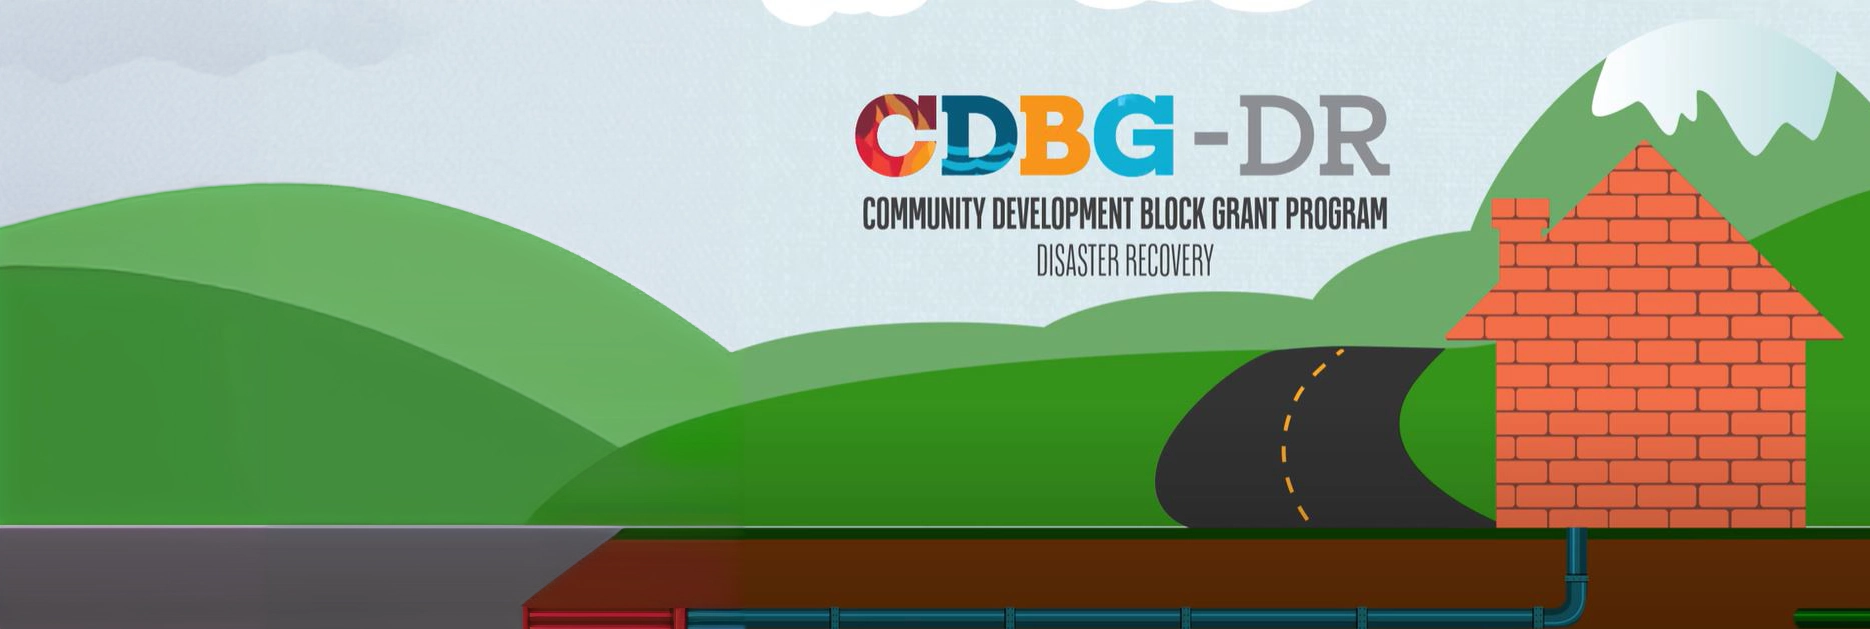 CDBG-DR logo